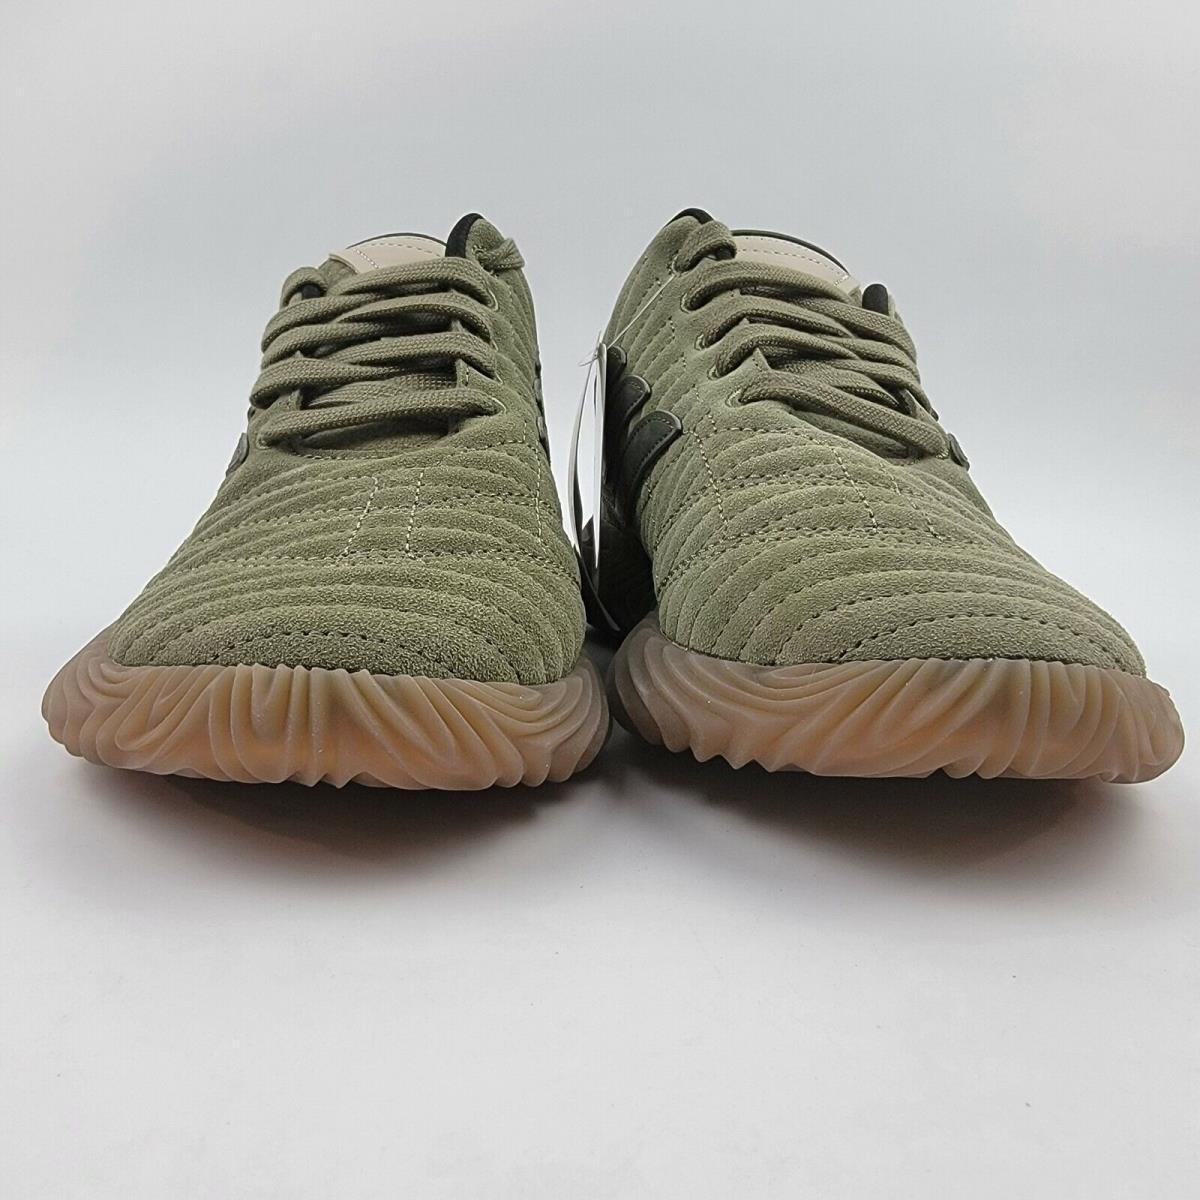 Adidas shoes Sobakov - Green 1